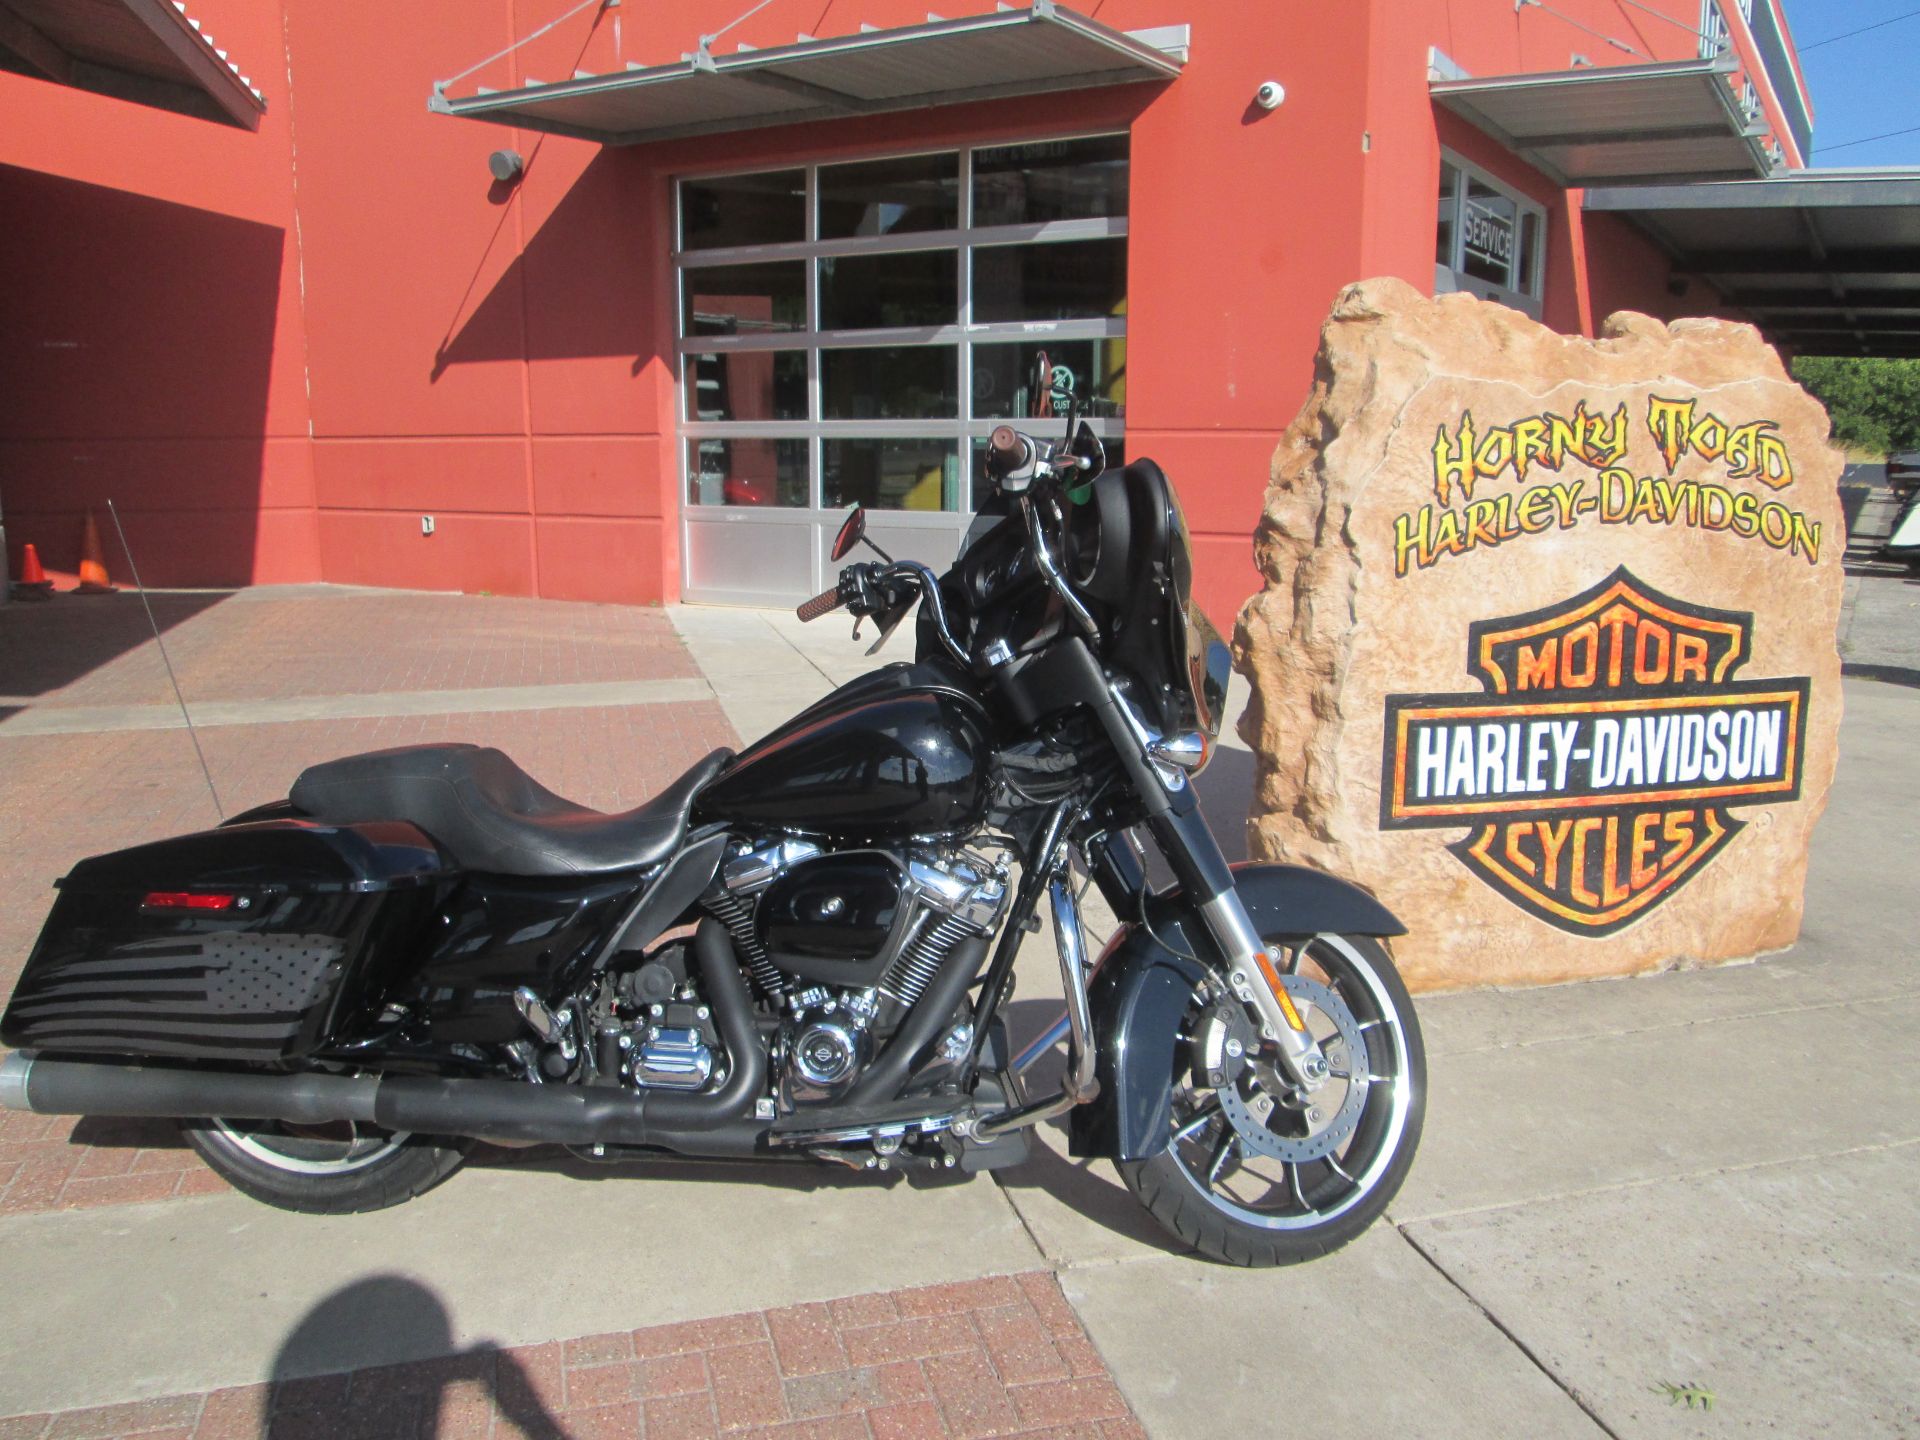 2021 Harley-Davidson Street Glide® in Temple, Texas - Photo 1